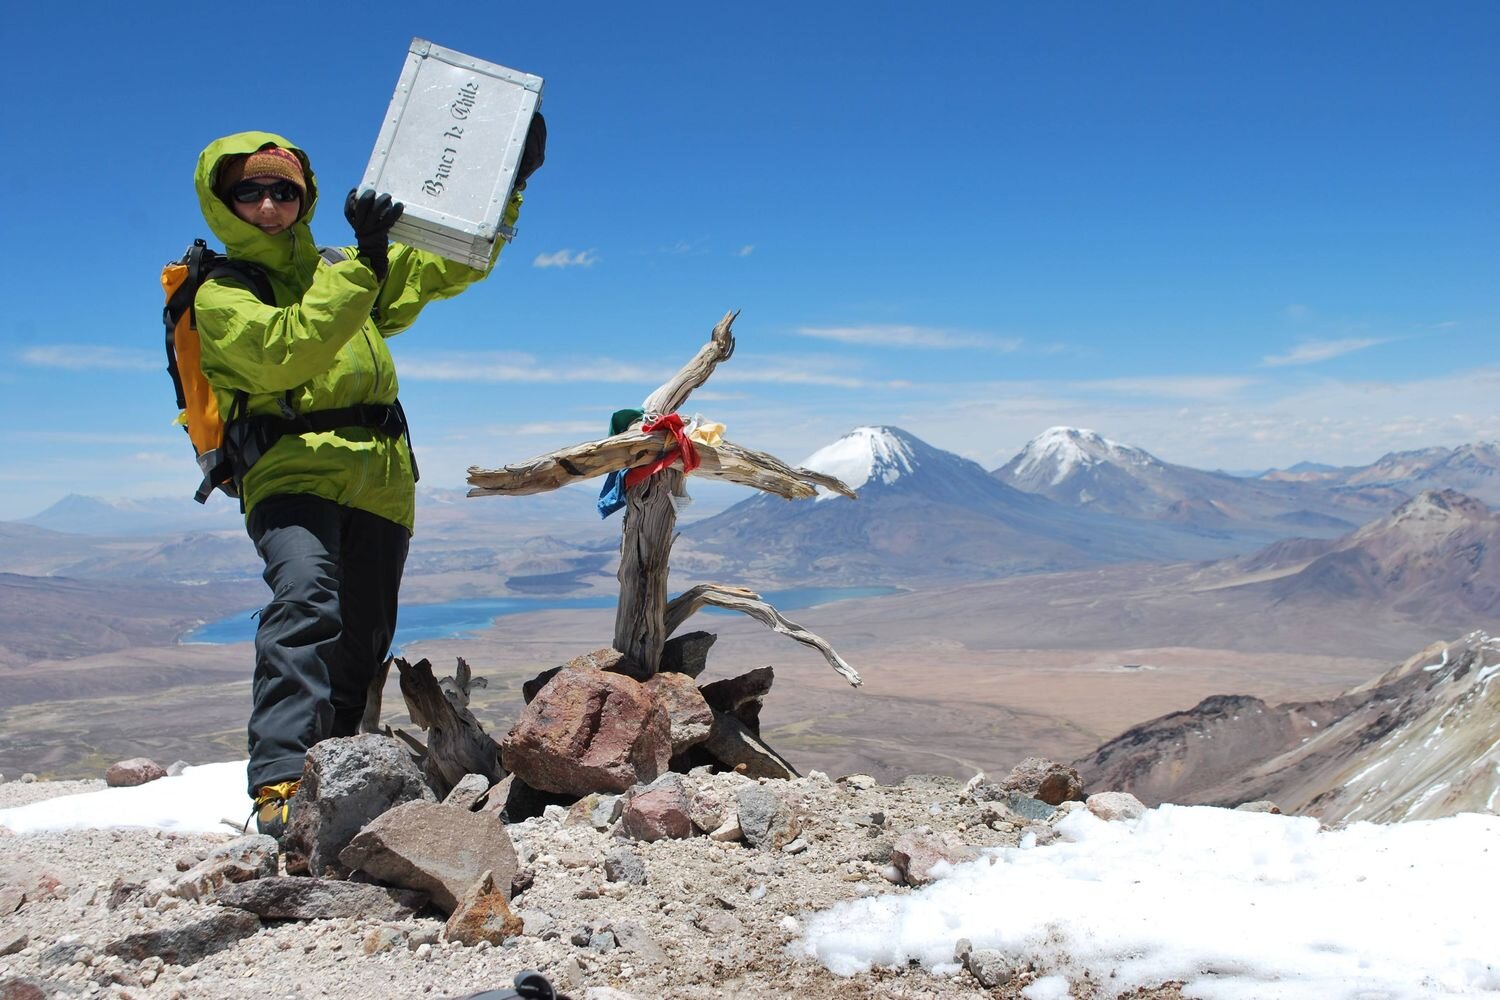  The Banco de Chile box on the summit of Acotango volcano 